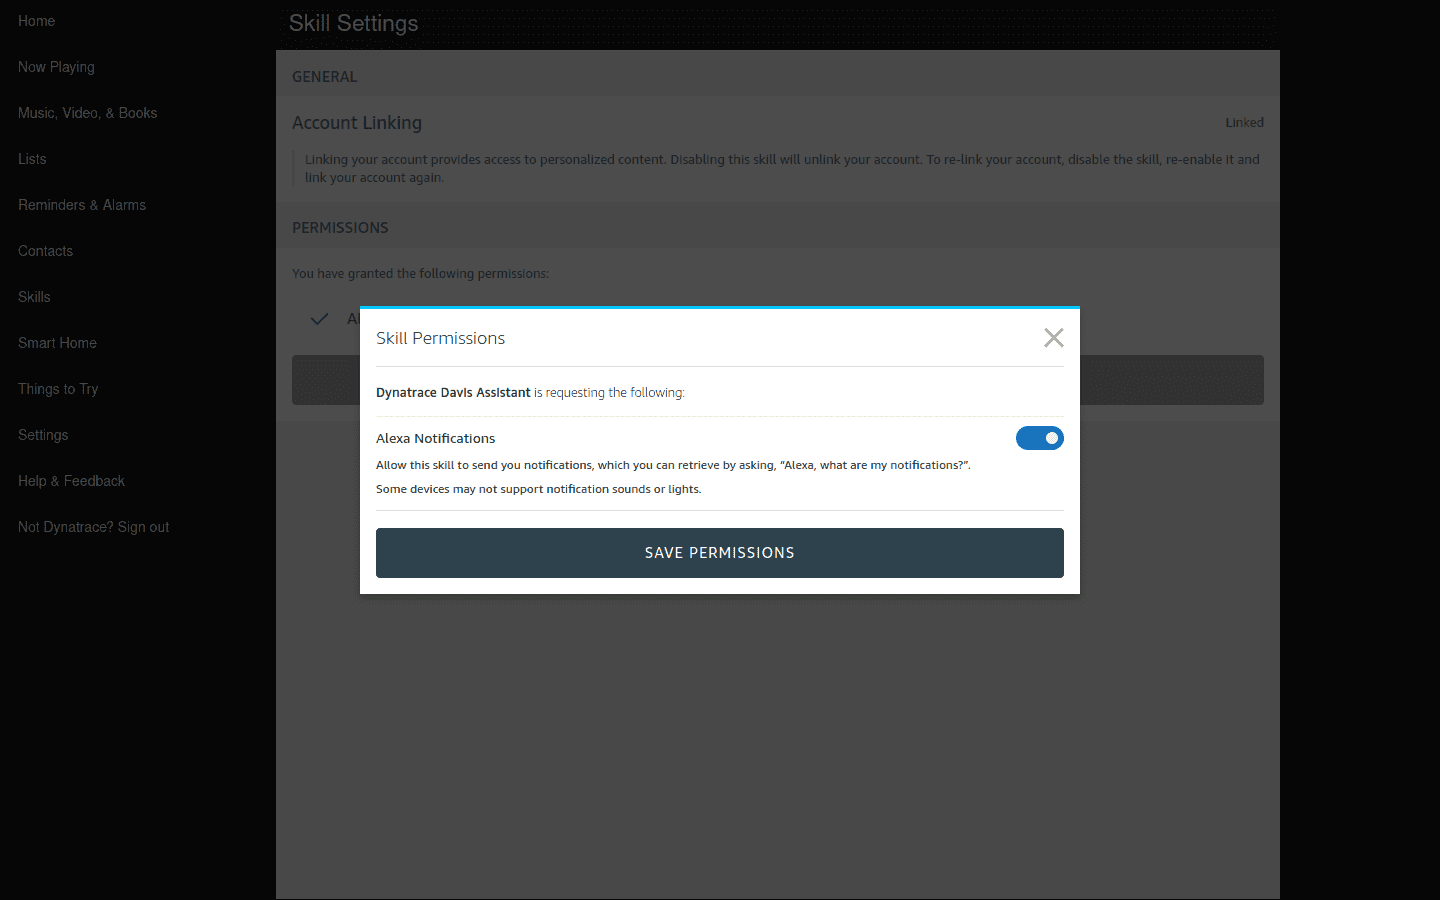 Alexa notification permission